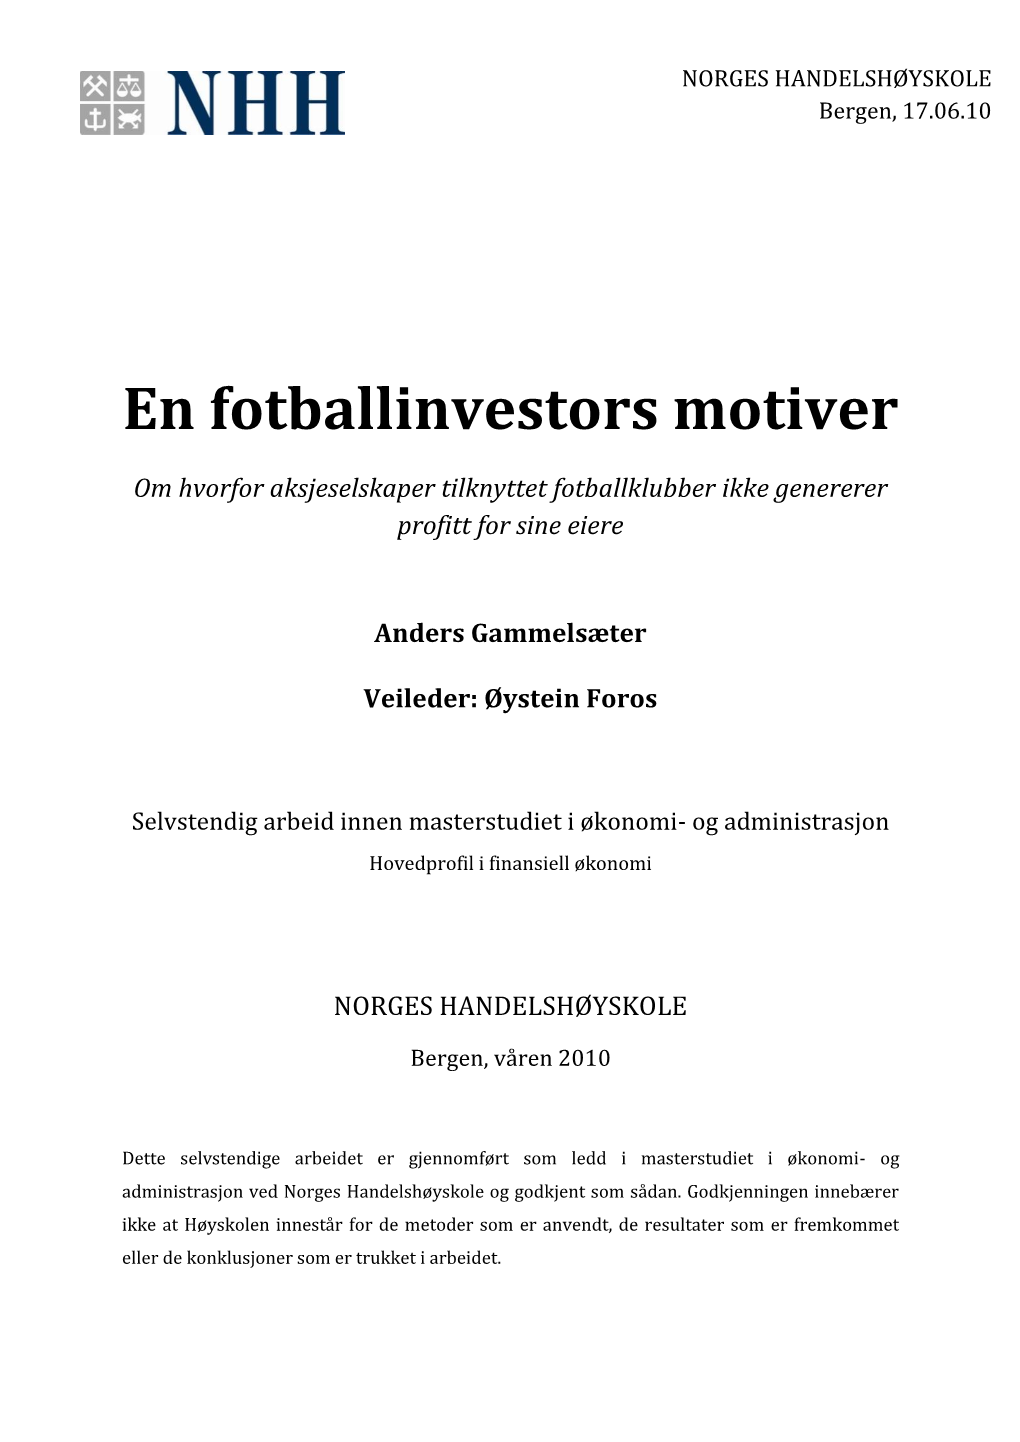 Fotballinvestorenes Motiver